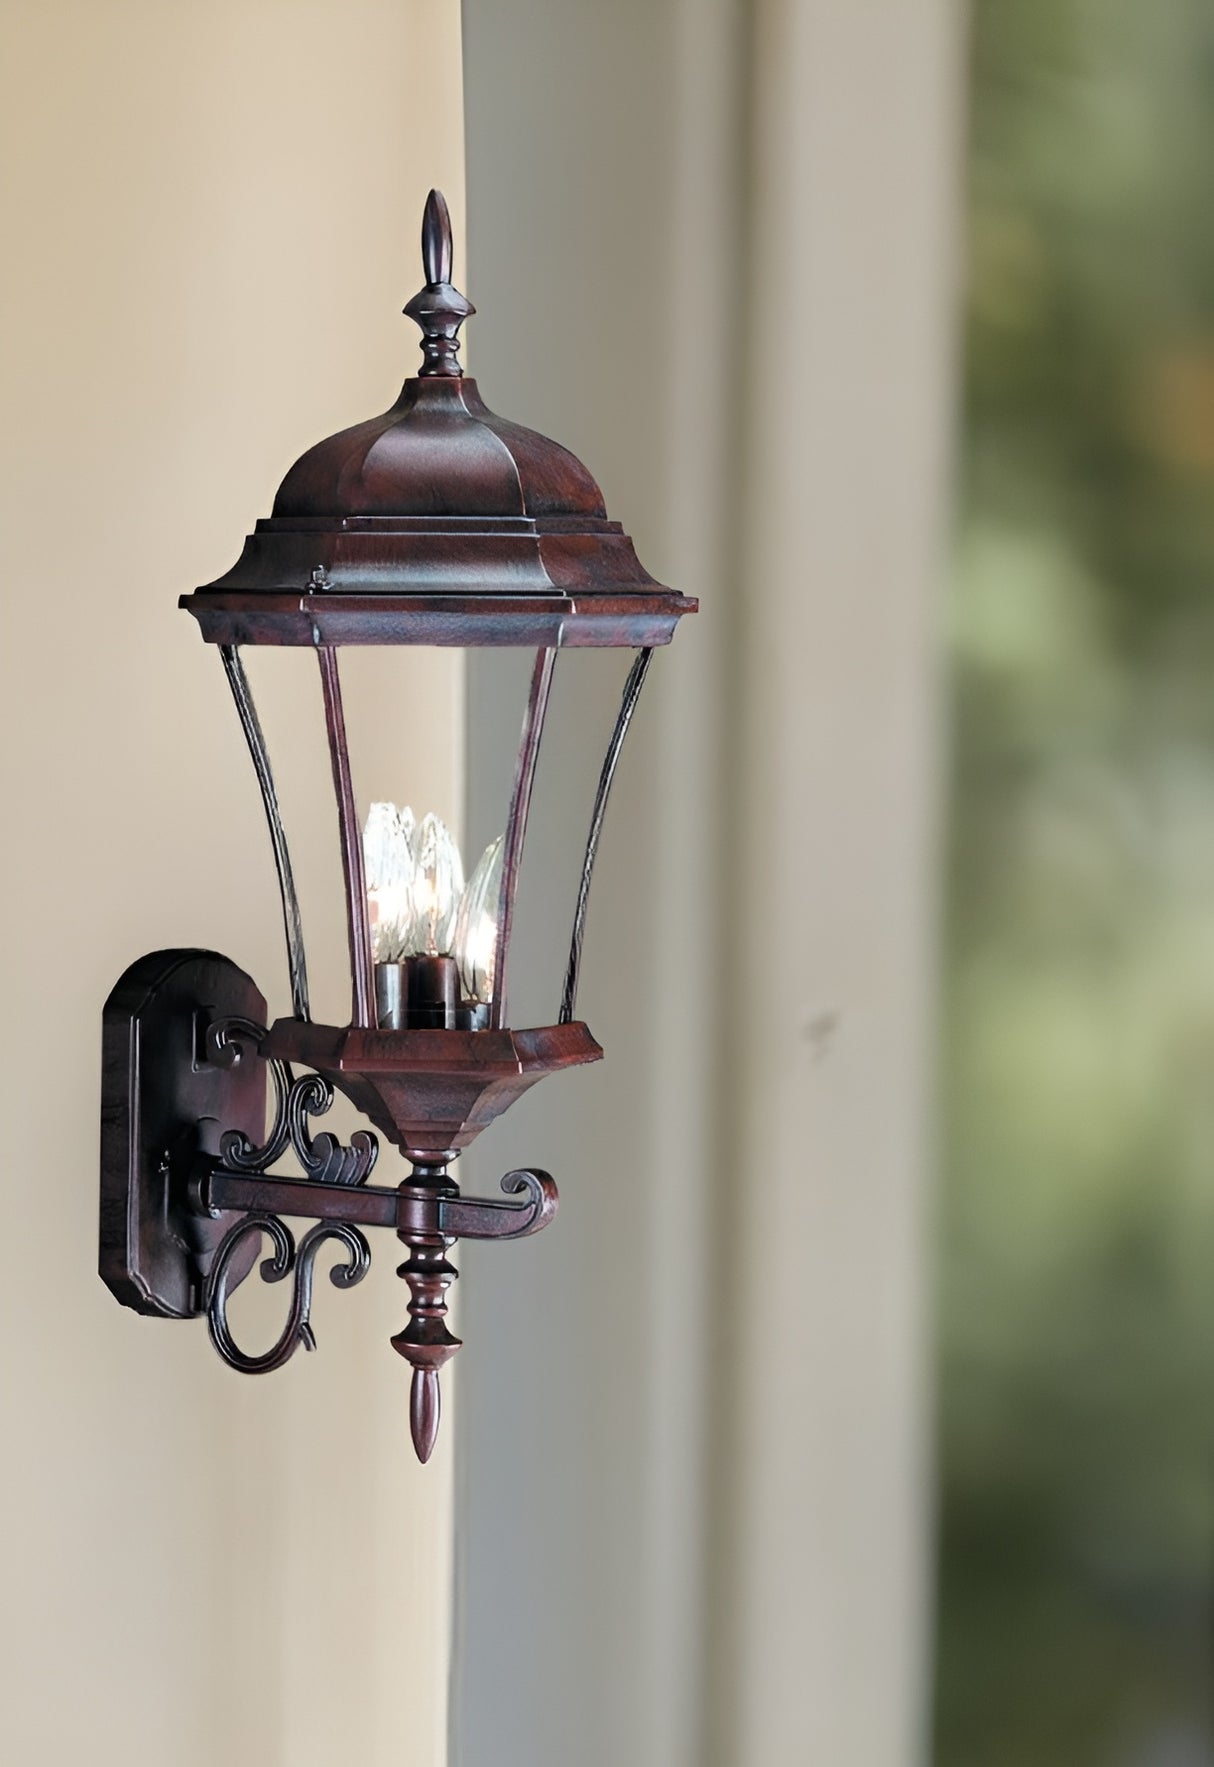 Dark Brown Ornamental Carousel Lantern Wall Light